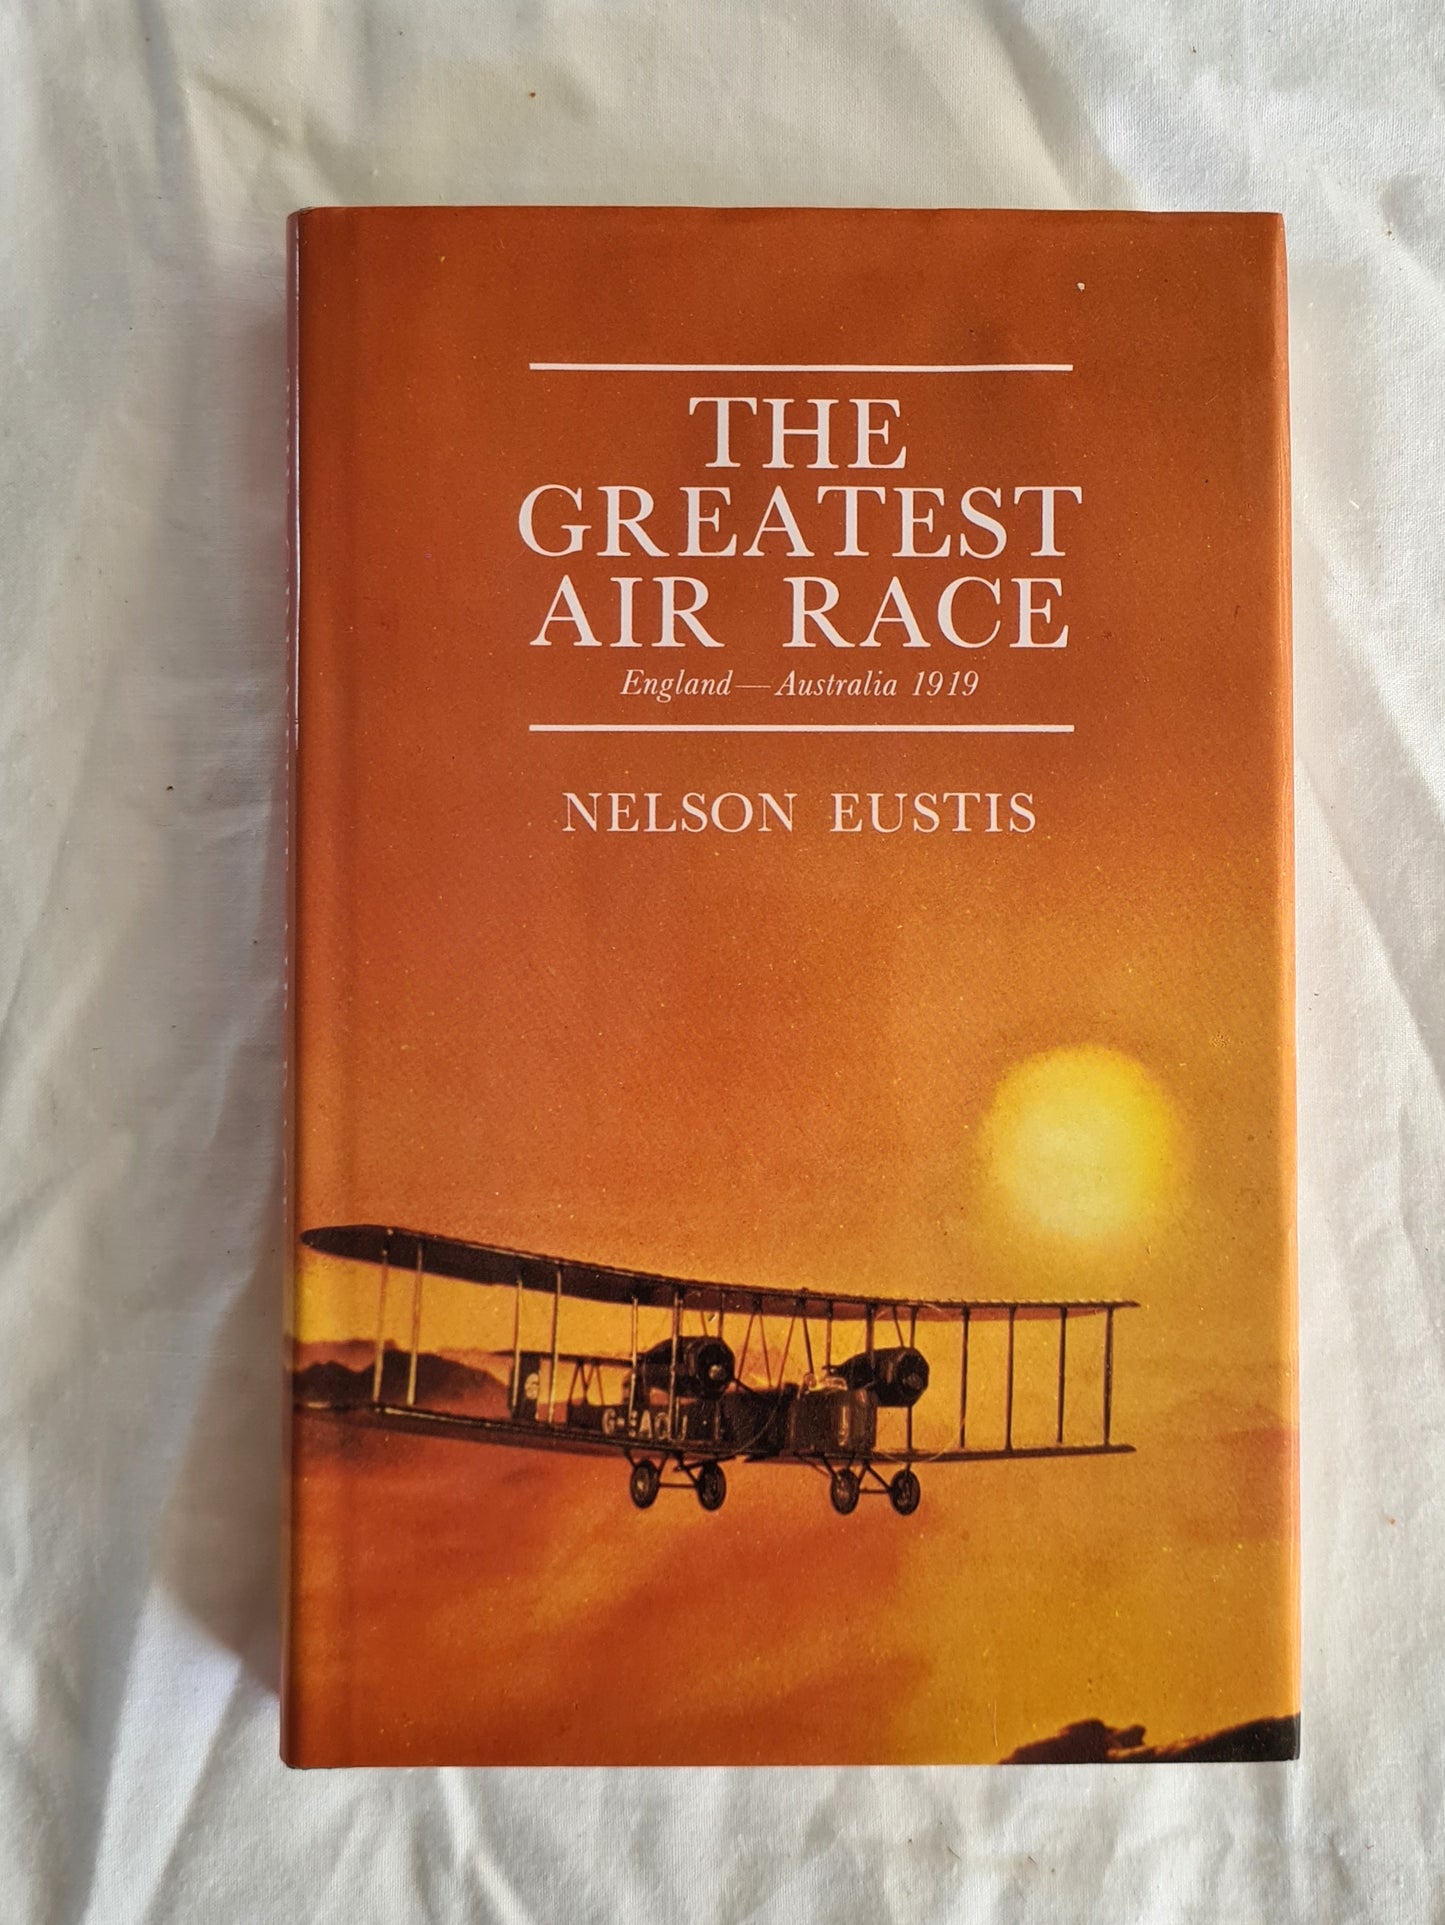 The Greatest Air Race  England – Australia 1919  by Nelson Eustis